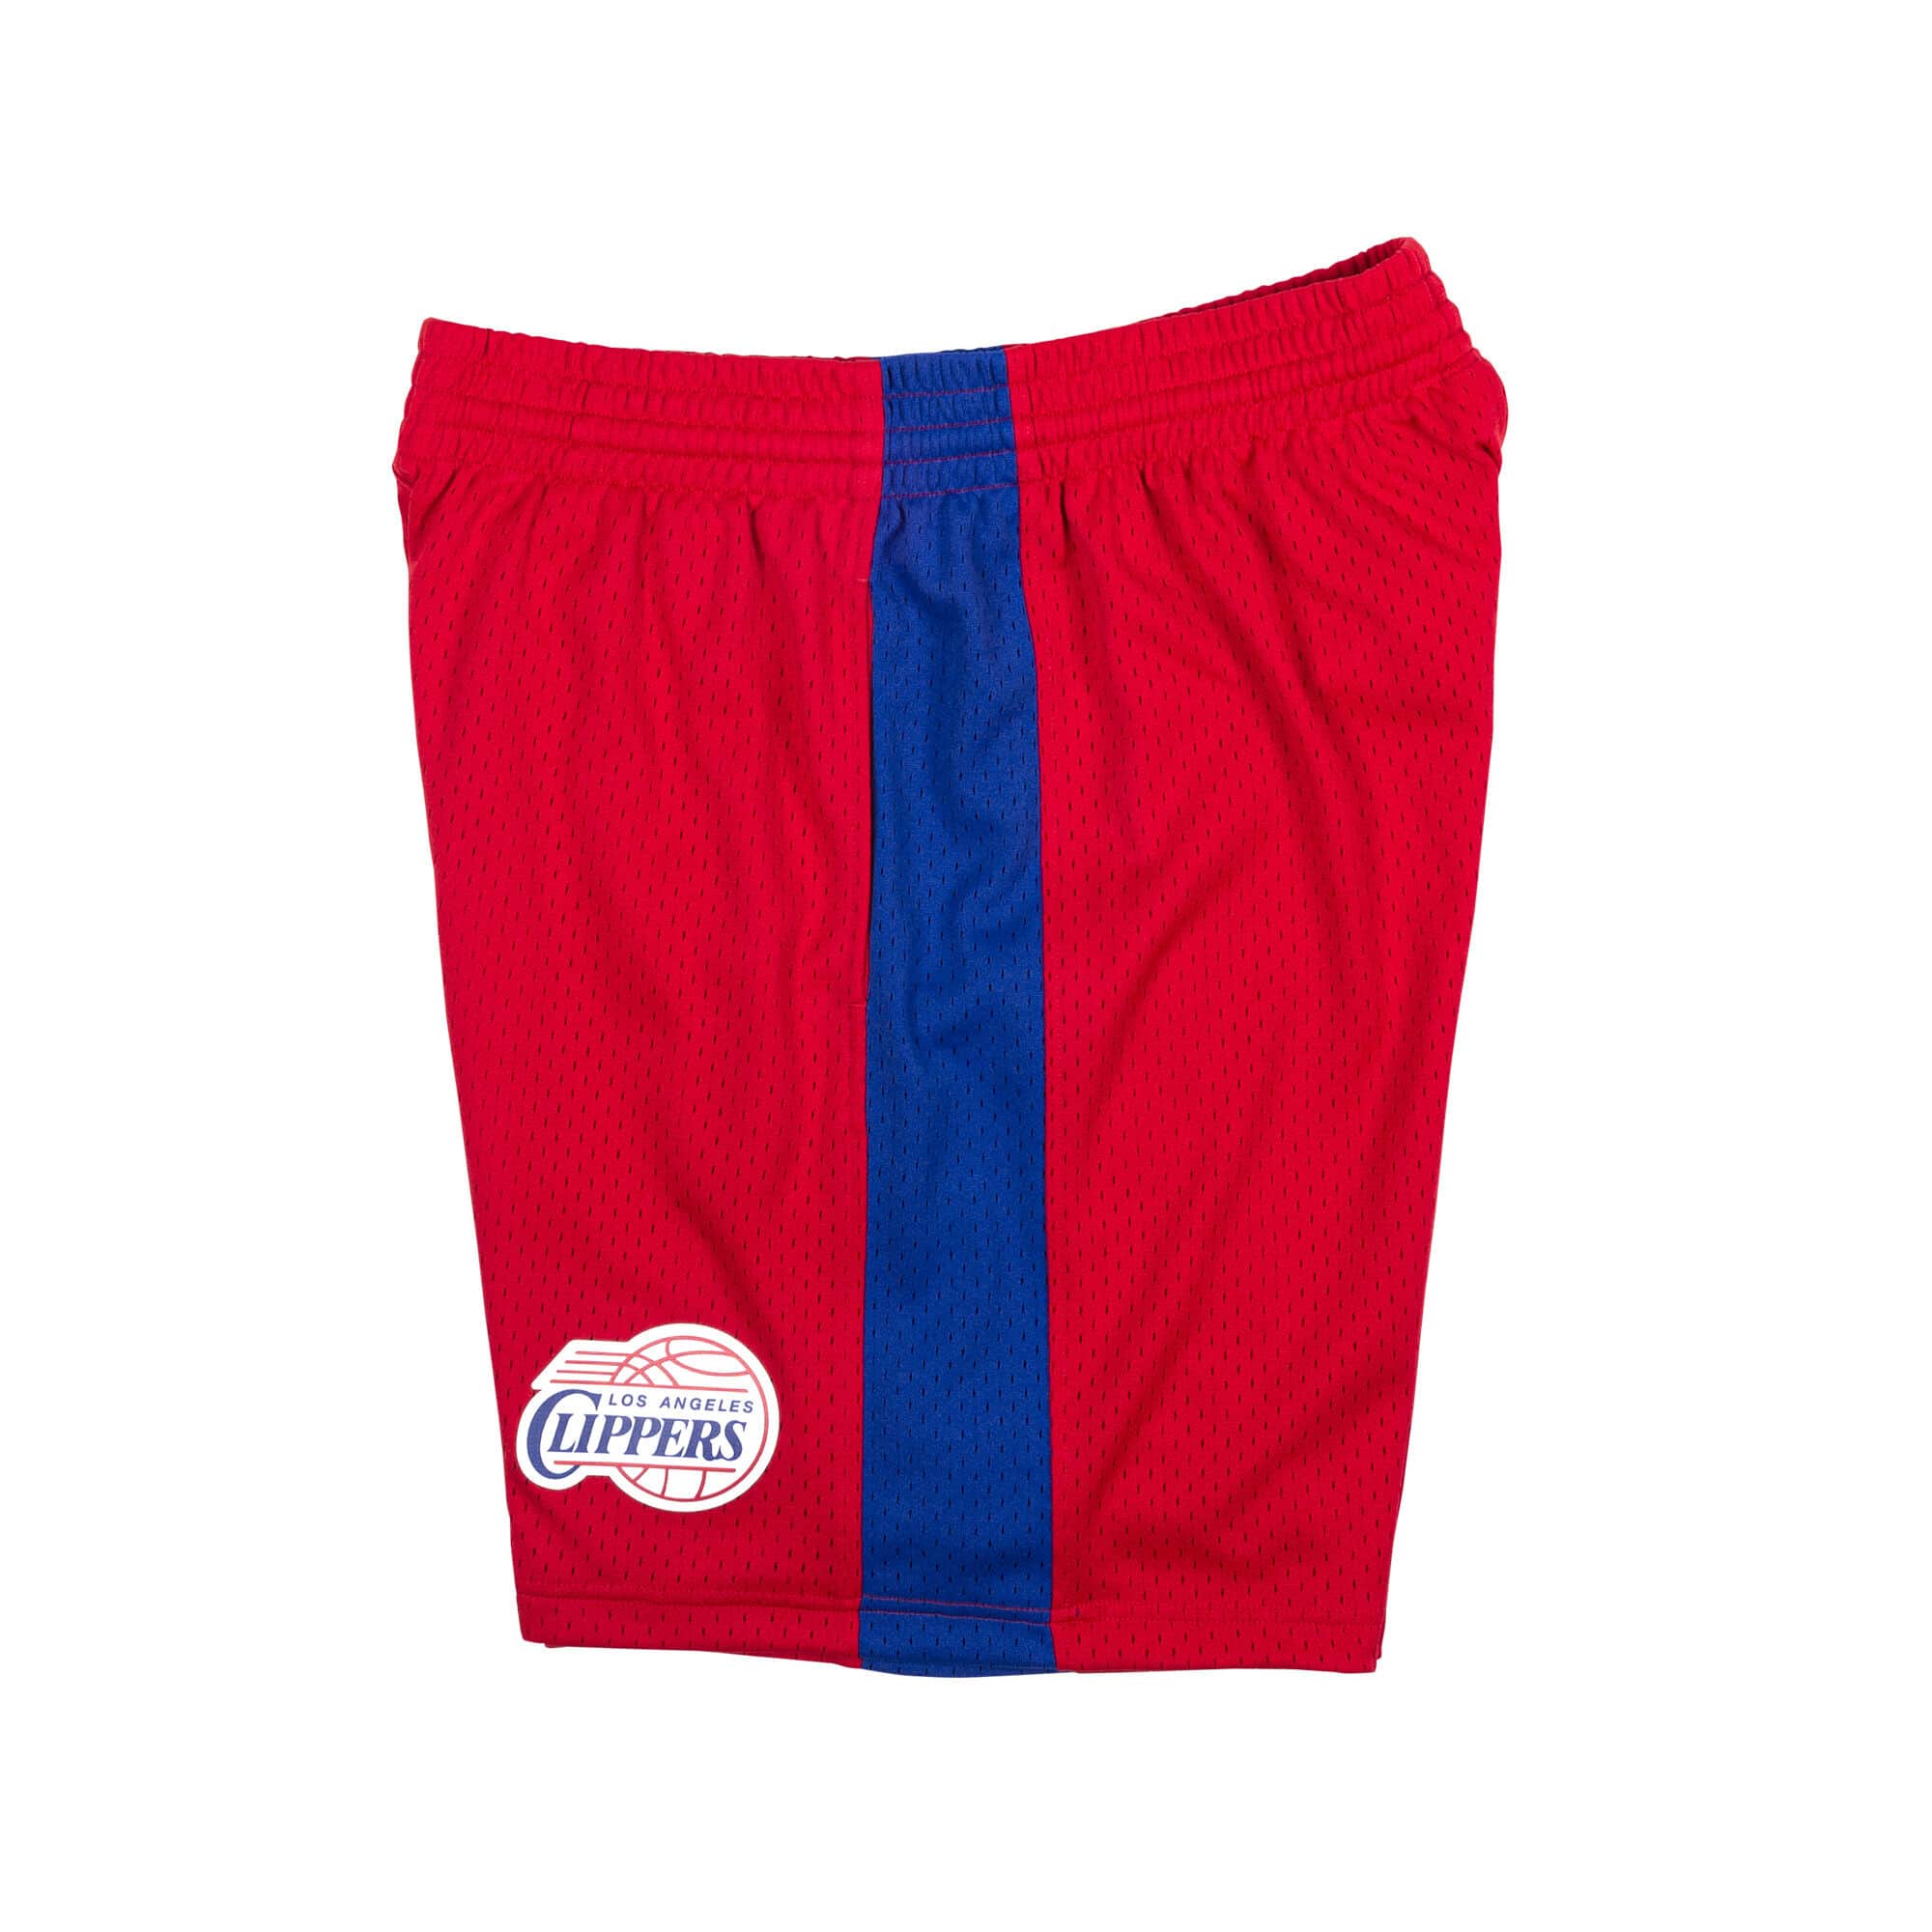 La Clippers City Edition Swingman Shorts 3XL